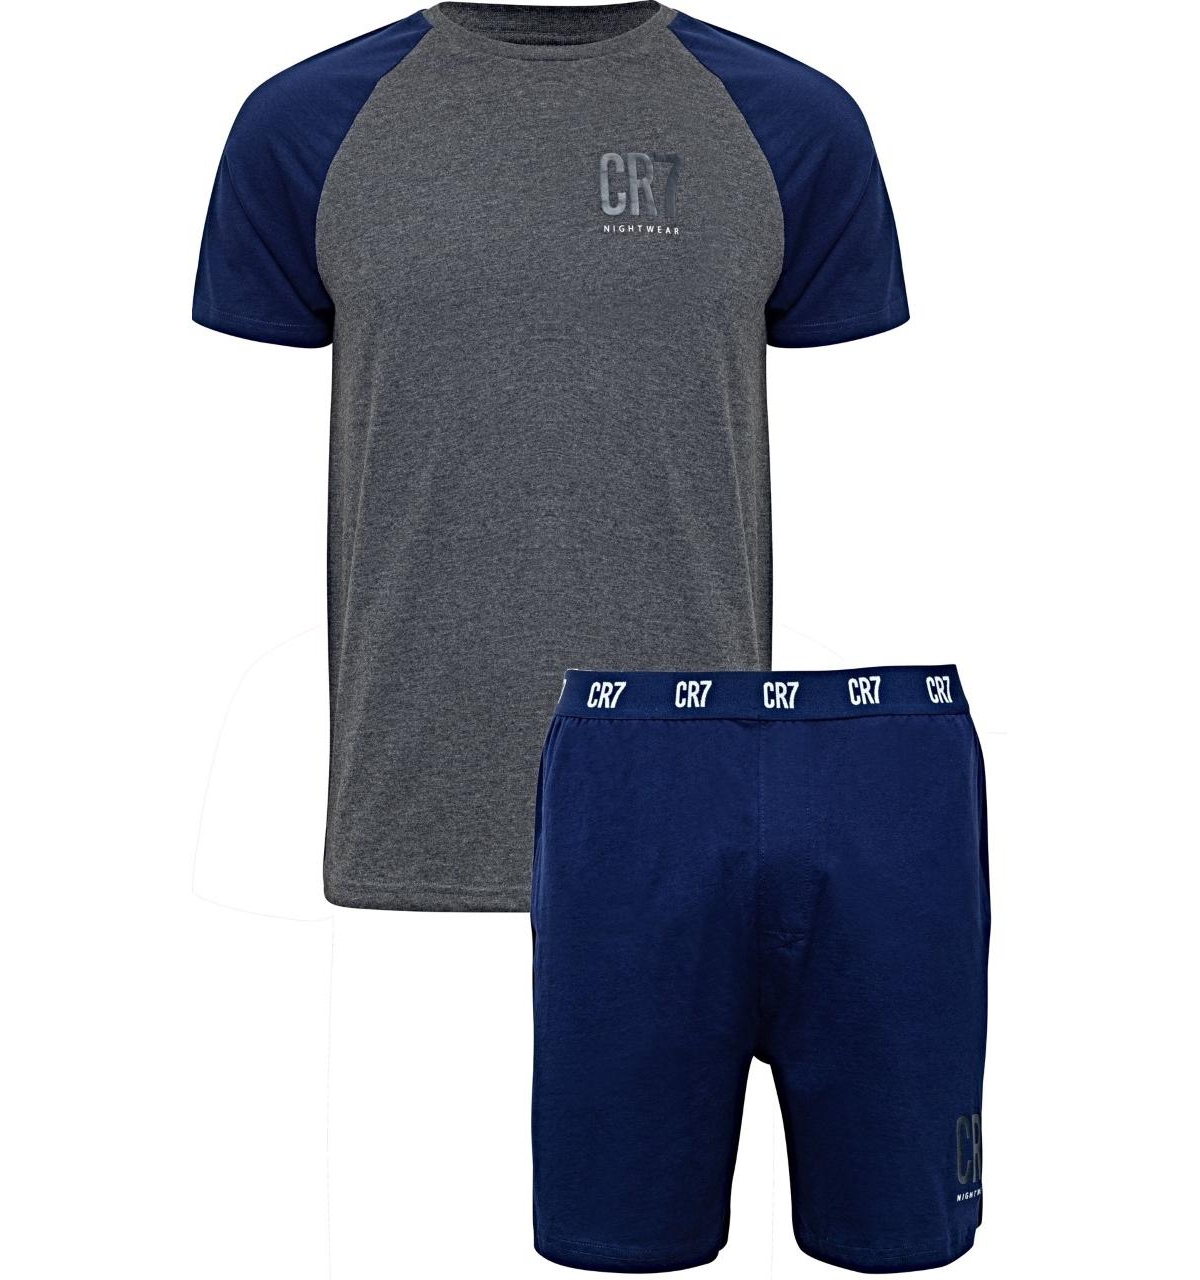 Men's Cotton Loungewear Top and Short Set - Navy, Gray